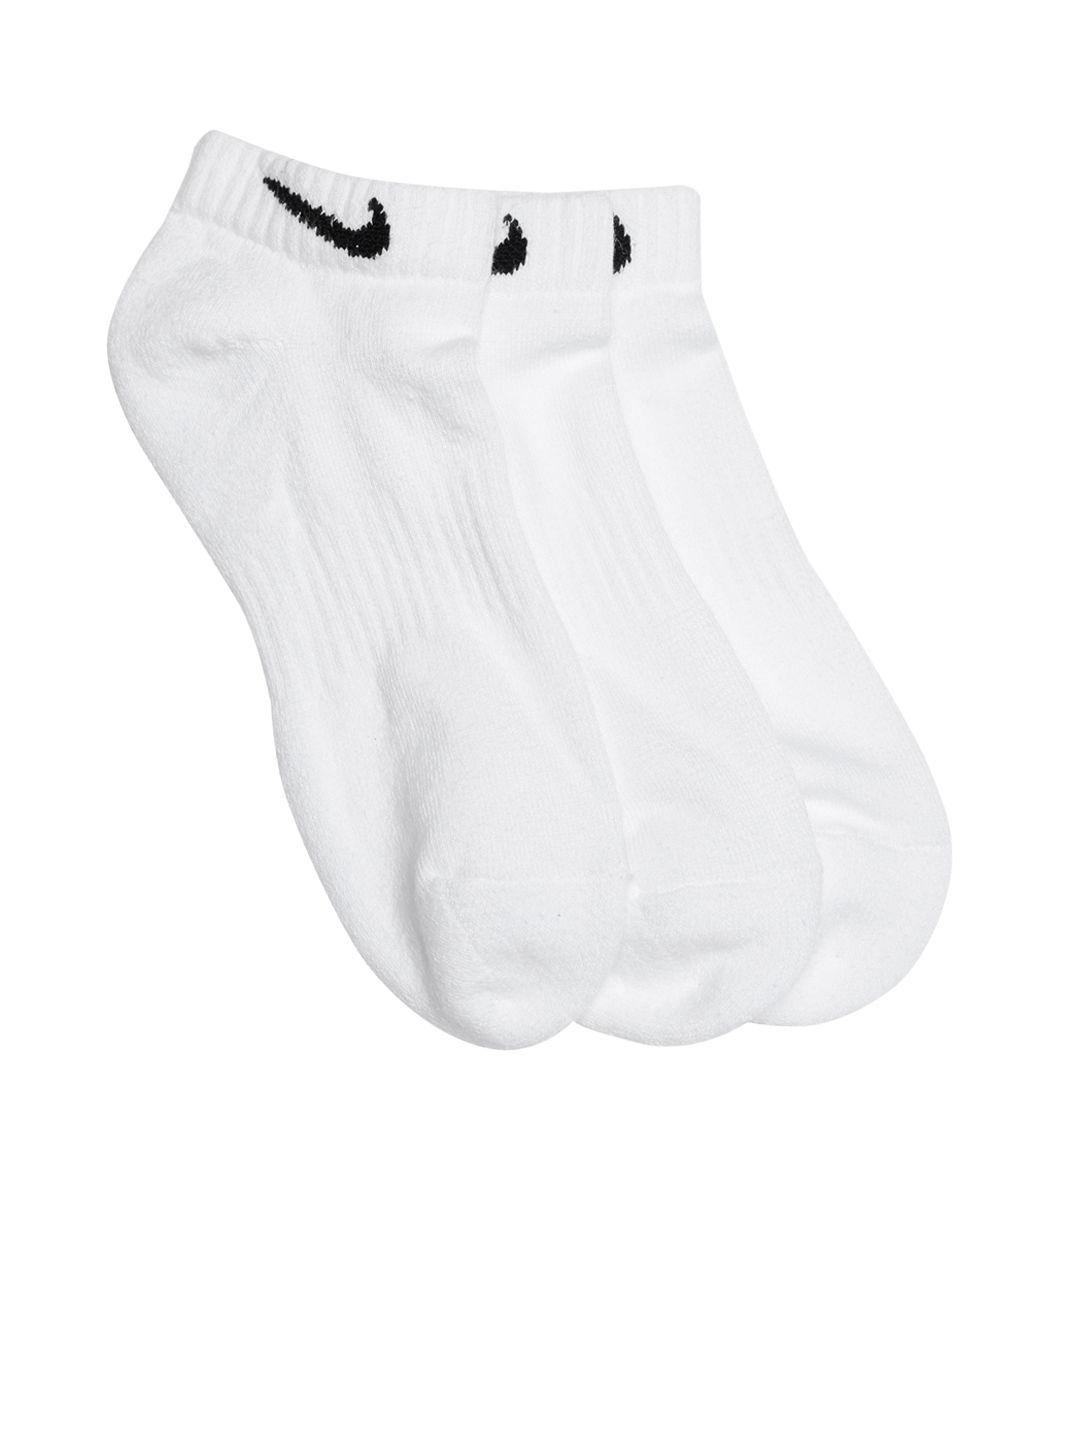 nike unisex pack of 3 white everyday cush low training ankle length socks